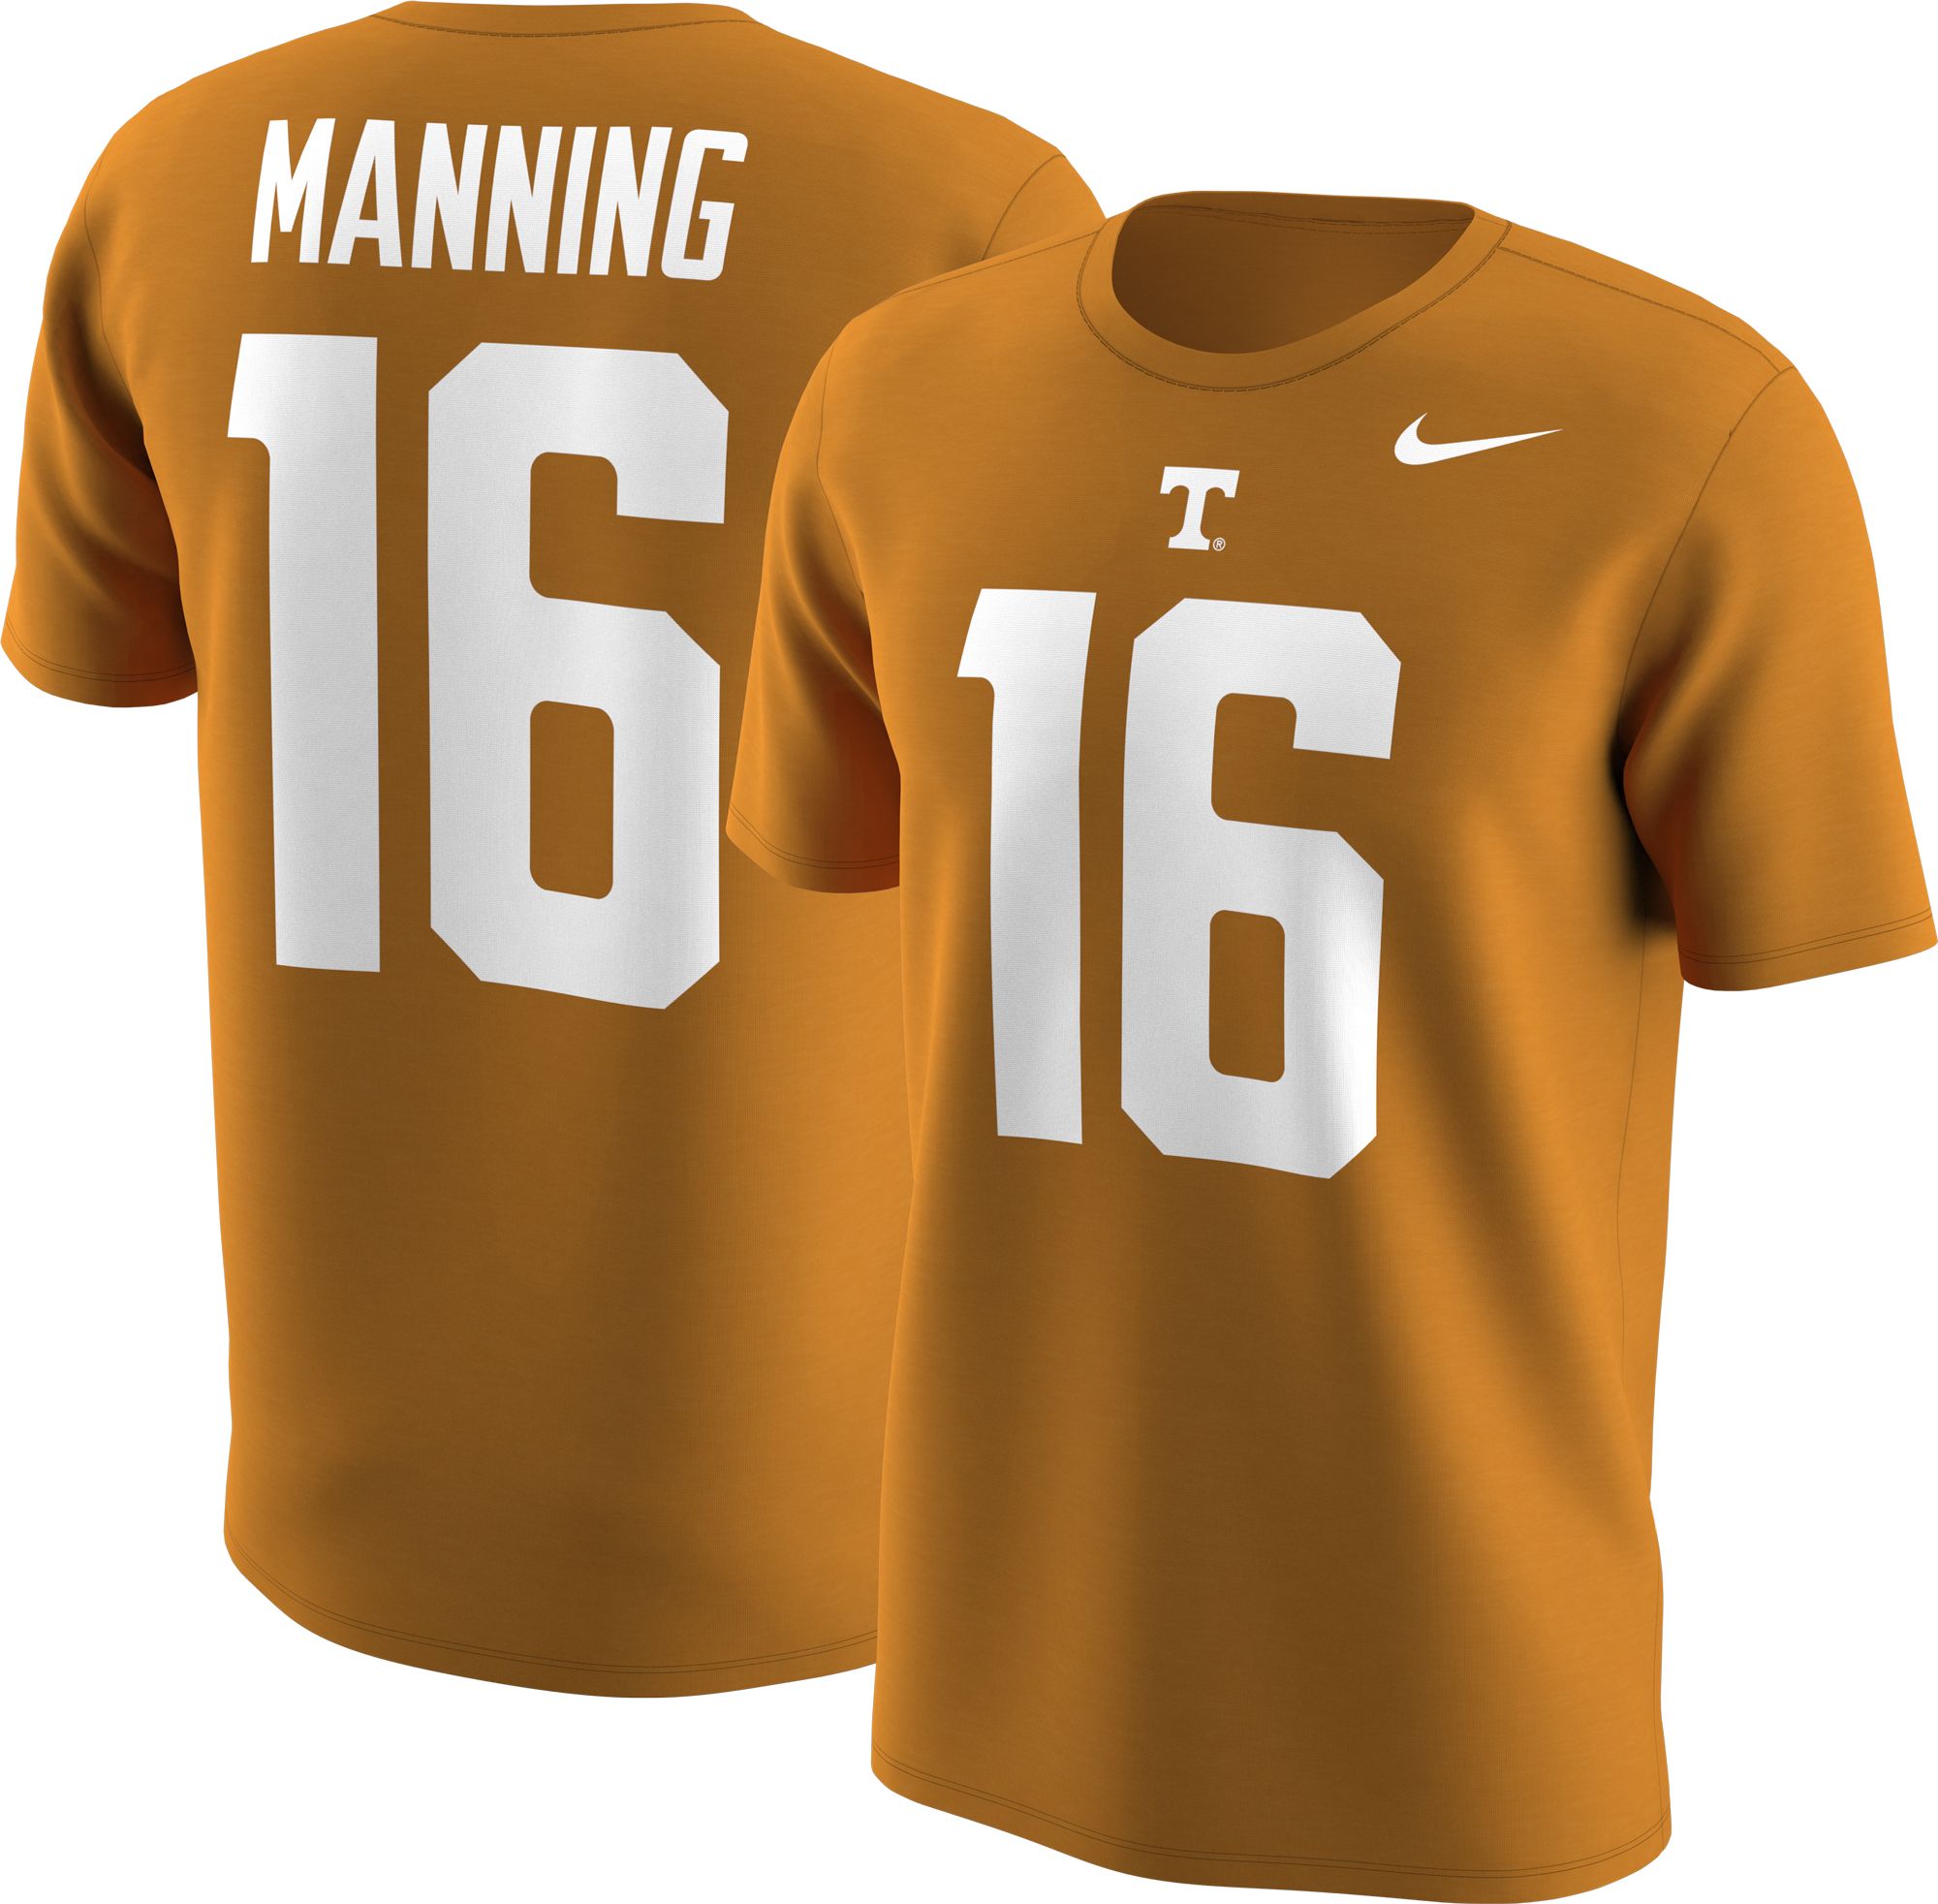 Tennessee Volunteers Peyton Manning #16 